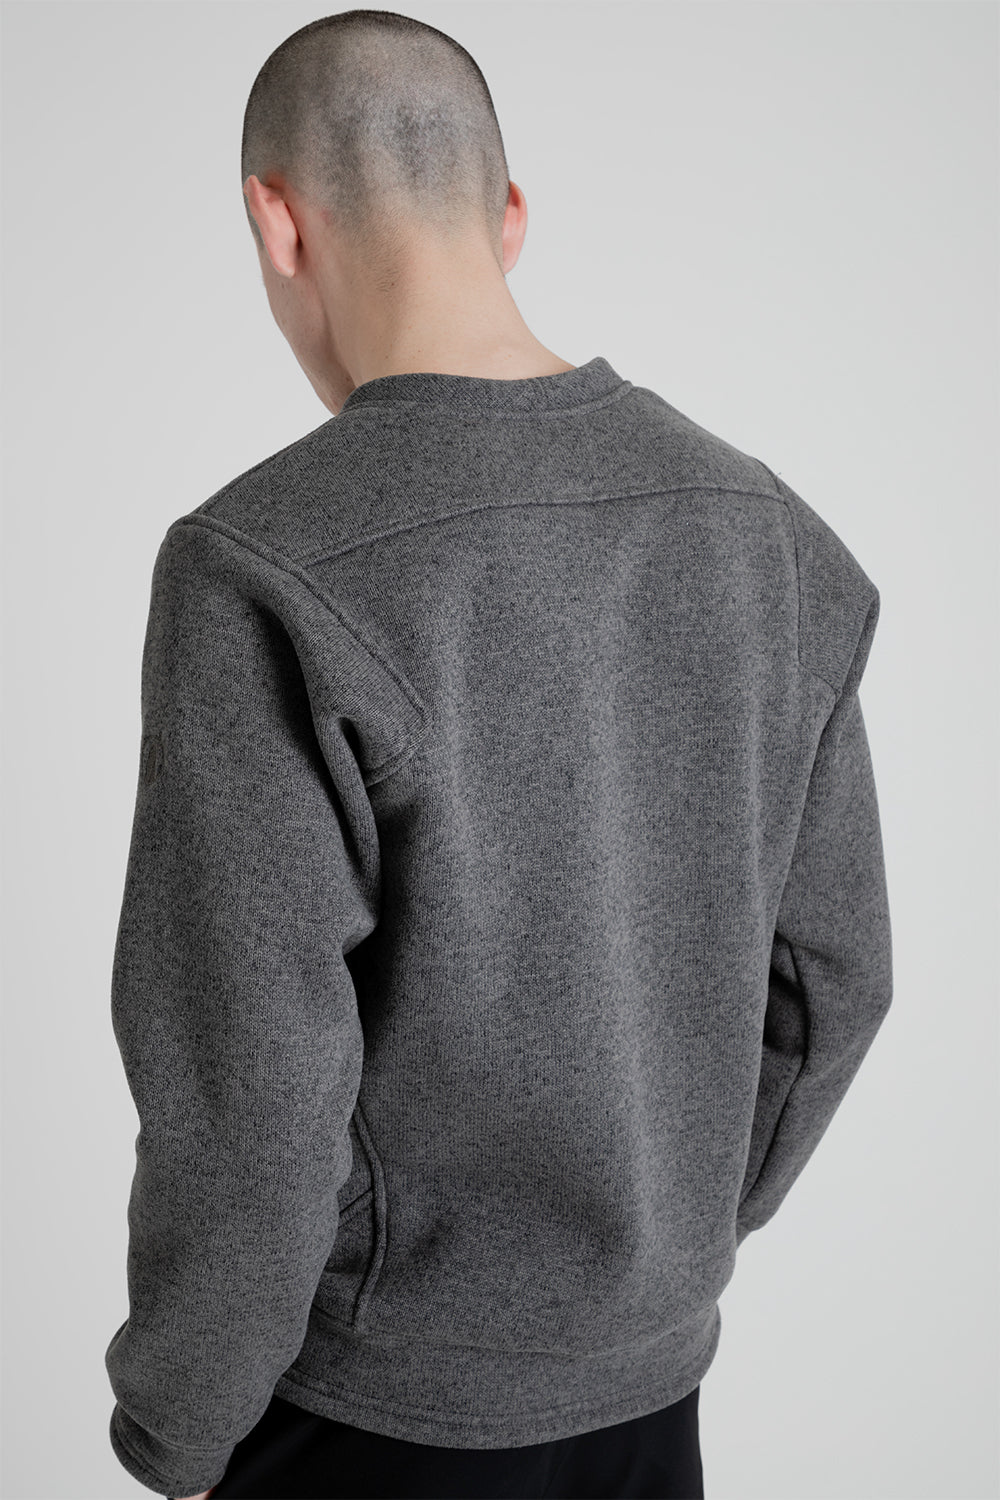 Poutnik Sage Sweatshirt in Ash Grey | Wallace Mercantile Shop